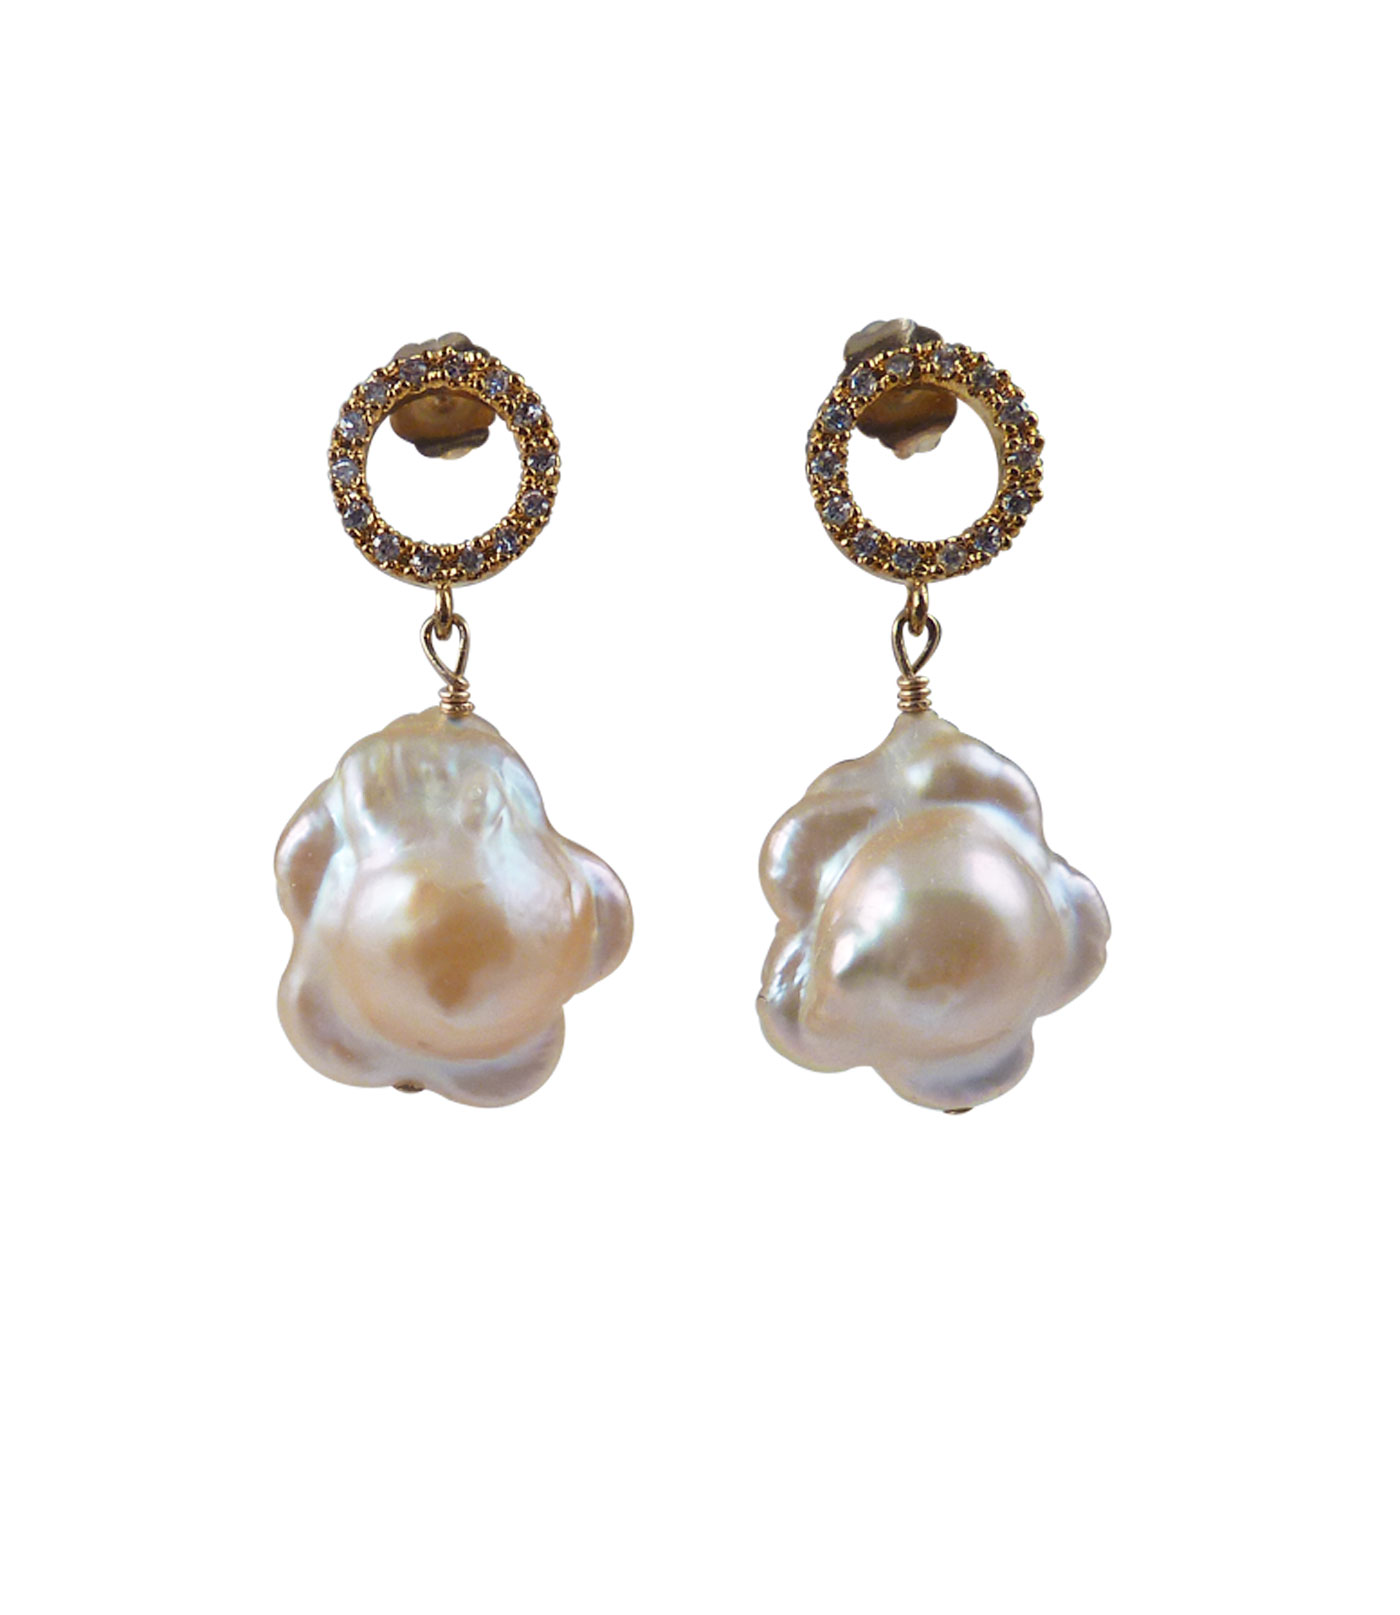 Unique pearl earrings rose bud pearls. Modern pearl jewelry